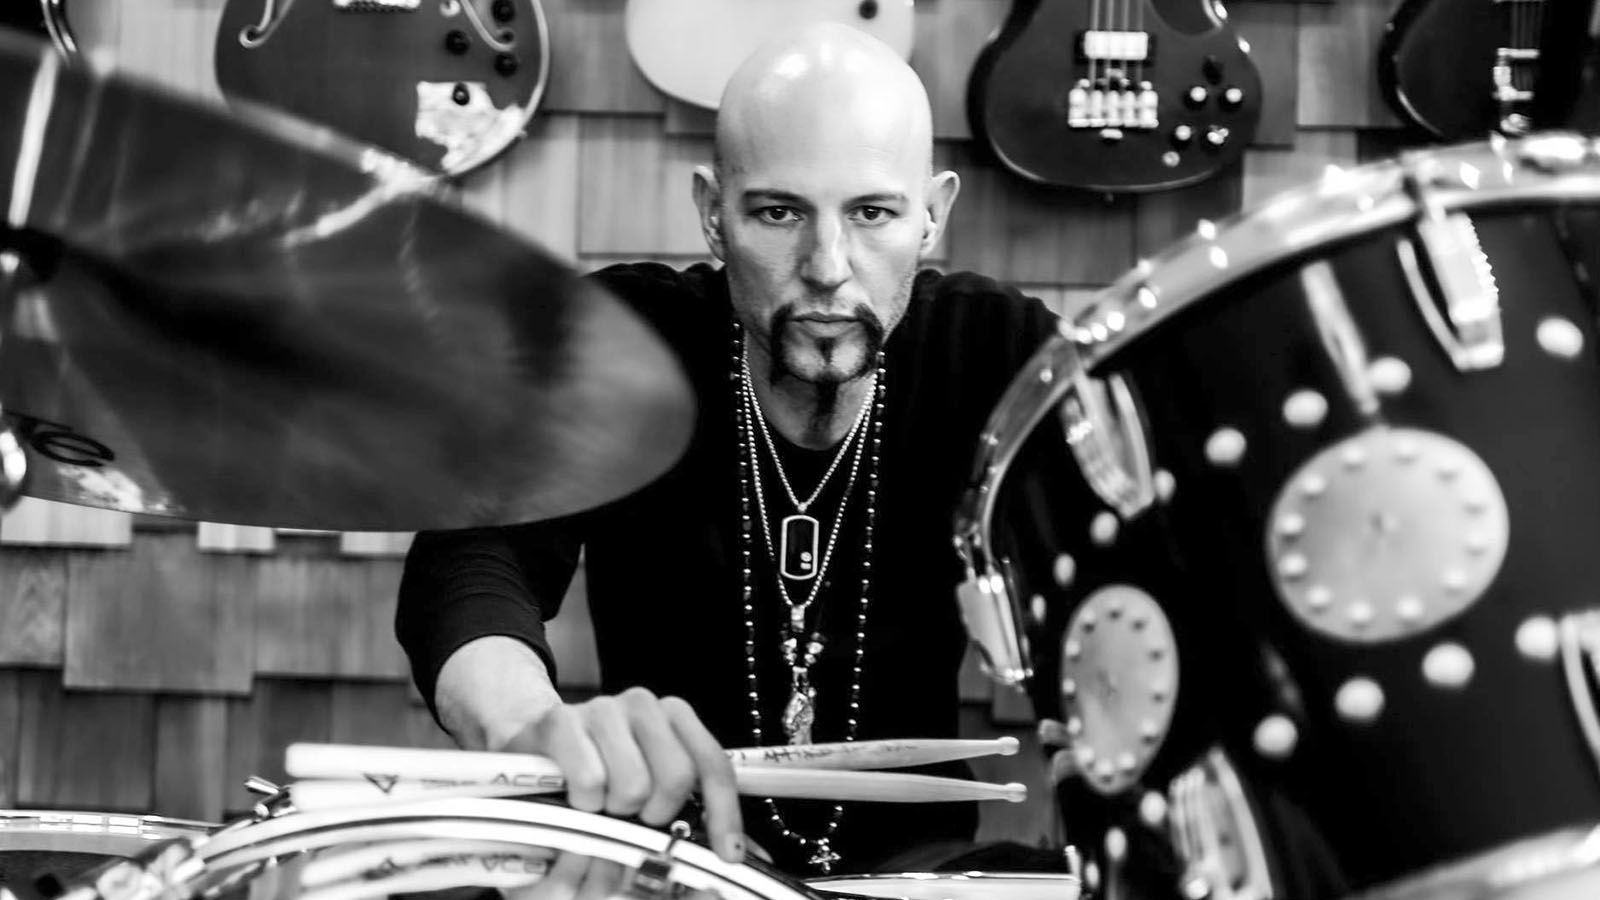 Matt Starr will teach a drumming masterclass at Sweetwater Sound on Nov. 2.